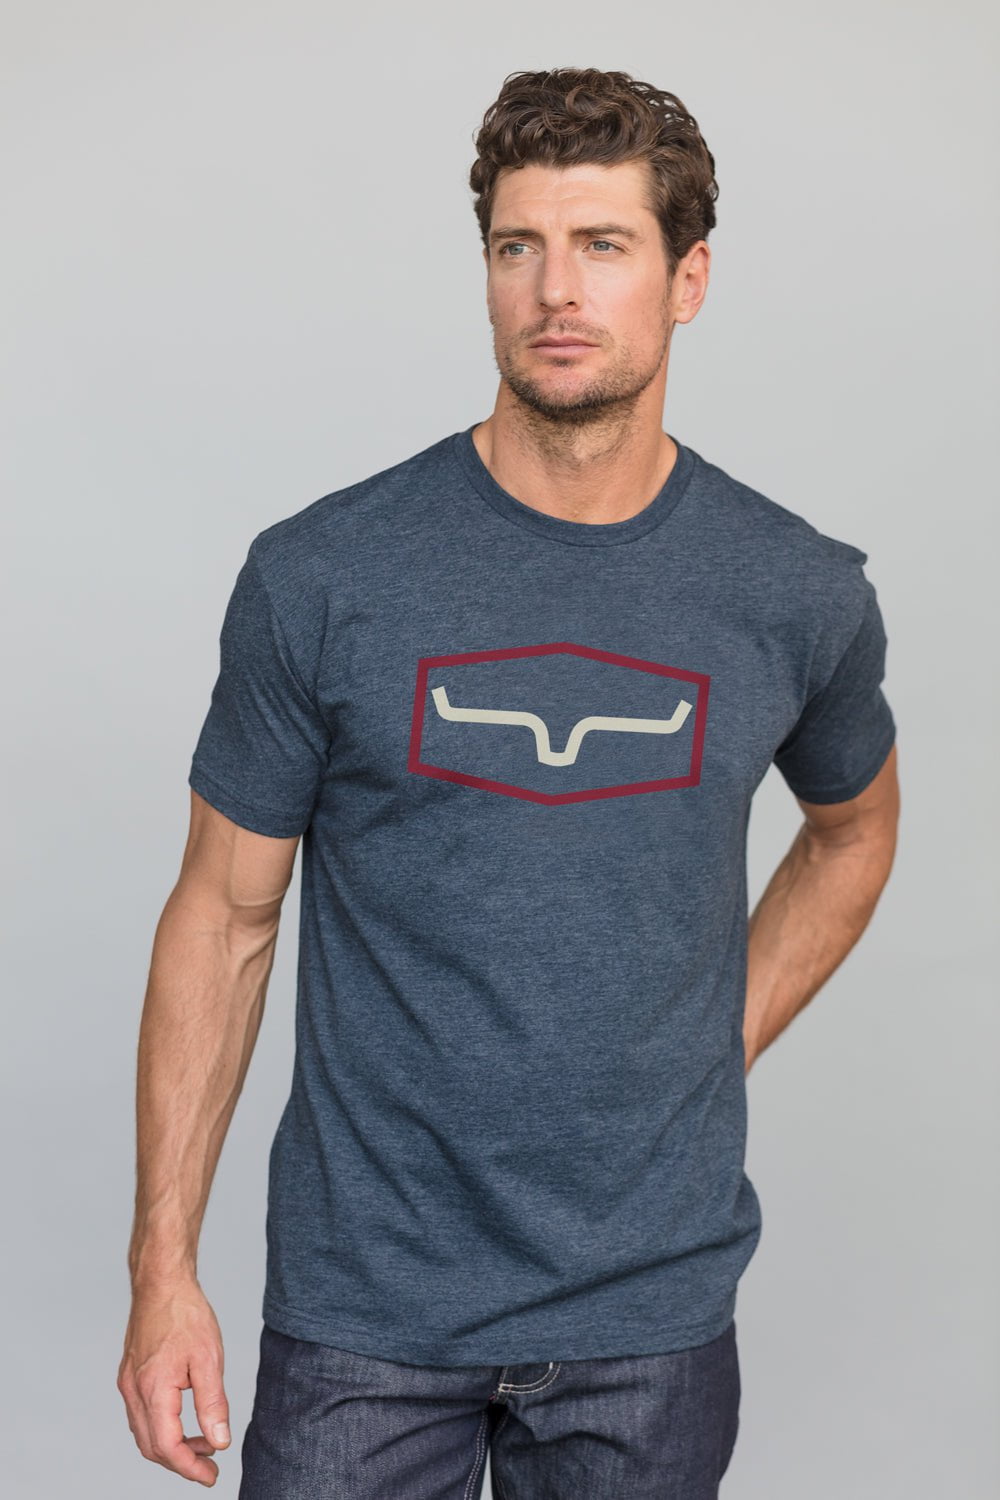 Kimes Ranch Mens Replay Tee T-Shirt Midnight Navy Cotton Blend S/S Log –  The Western Company